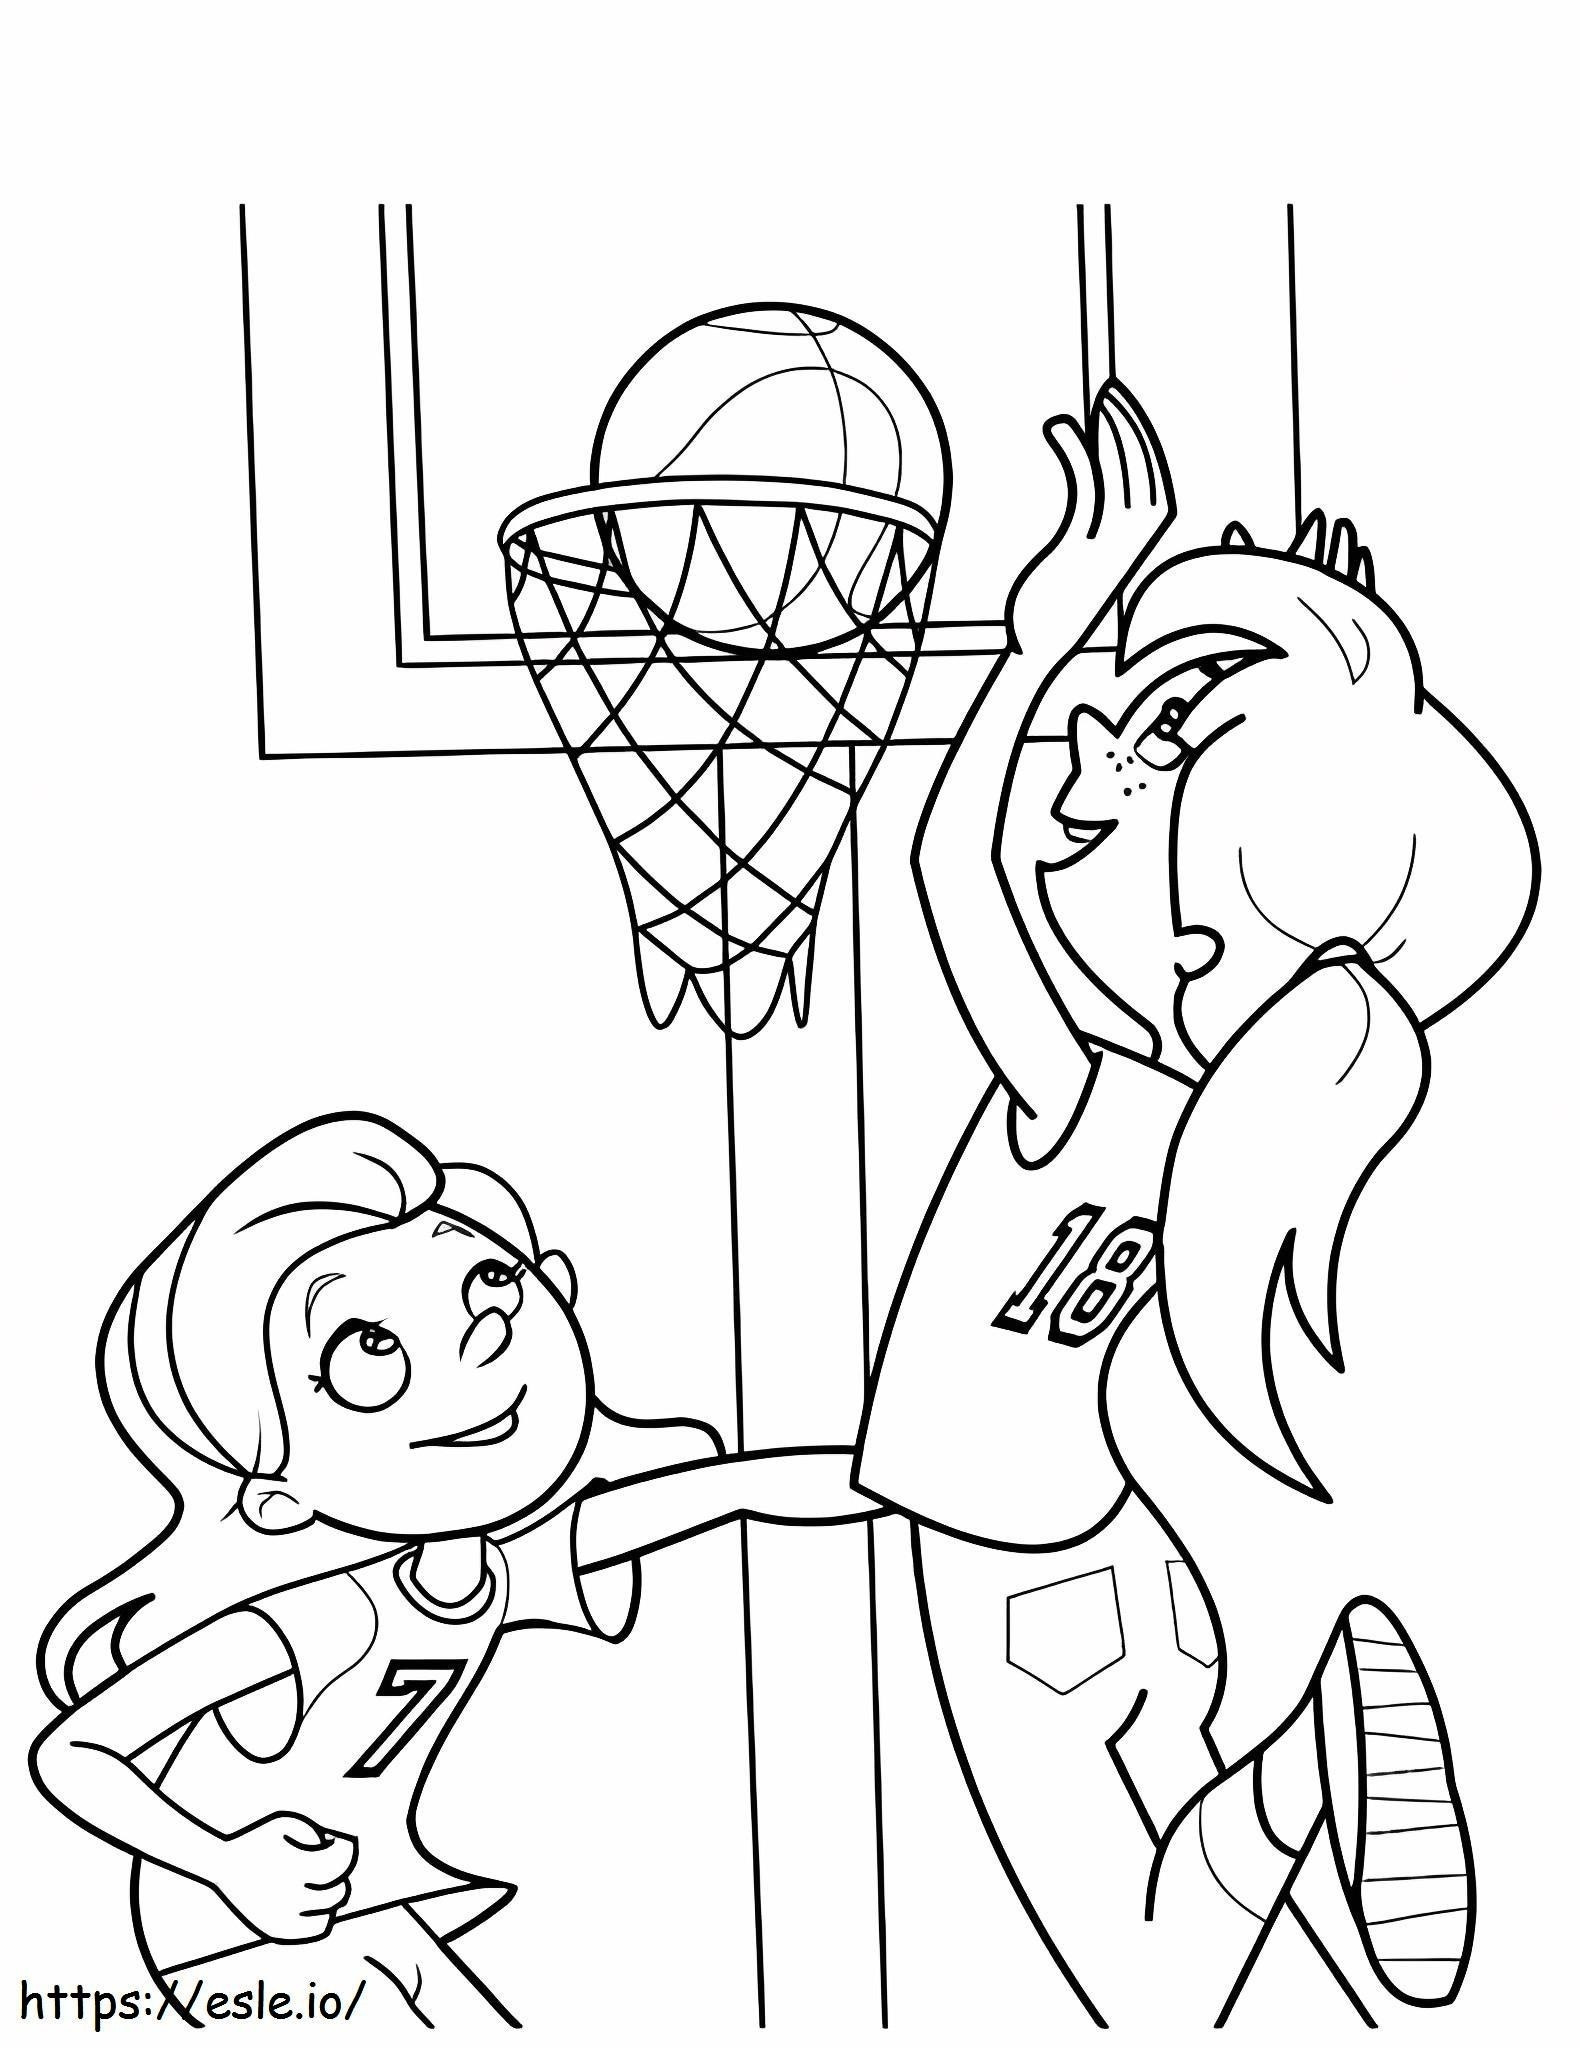 Dos niñas jugando baloncesto para colorear